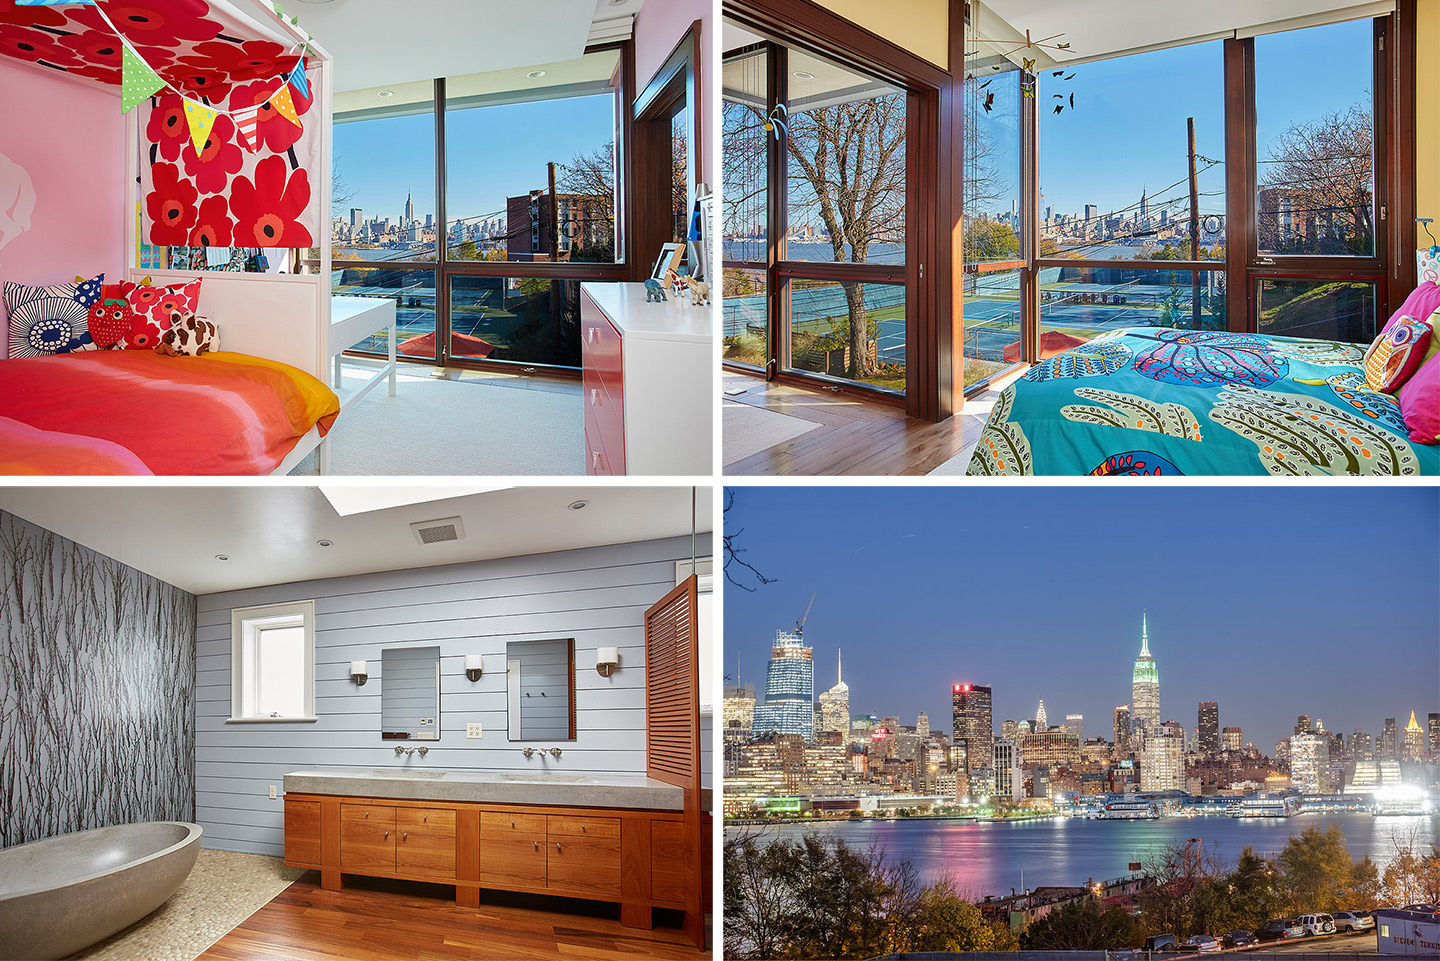 Homes for sale Hoboken 907-Castle Point Terrace Collage